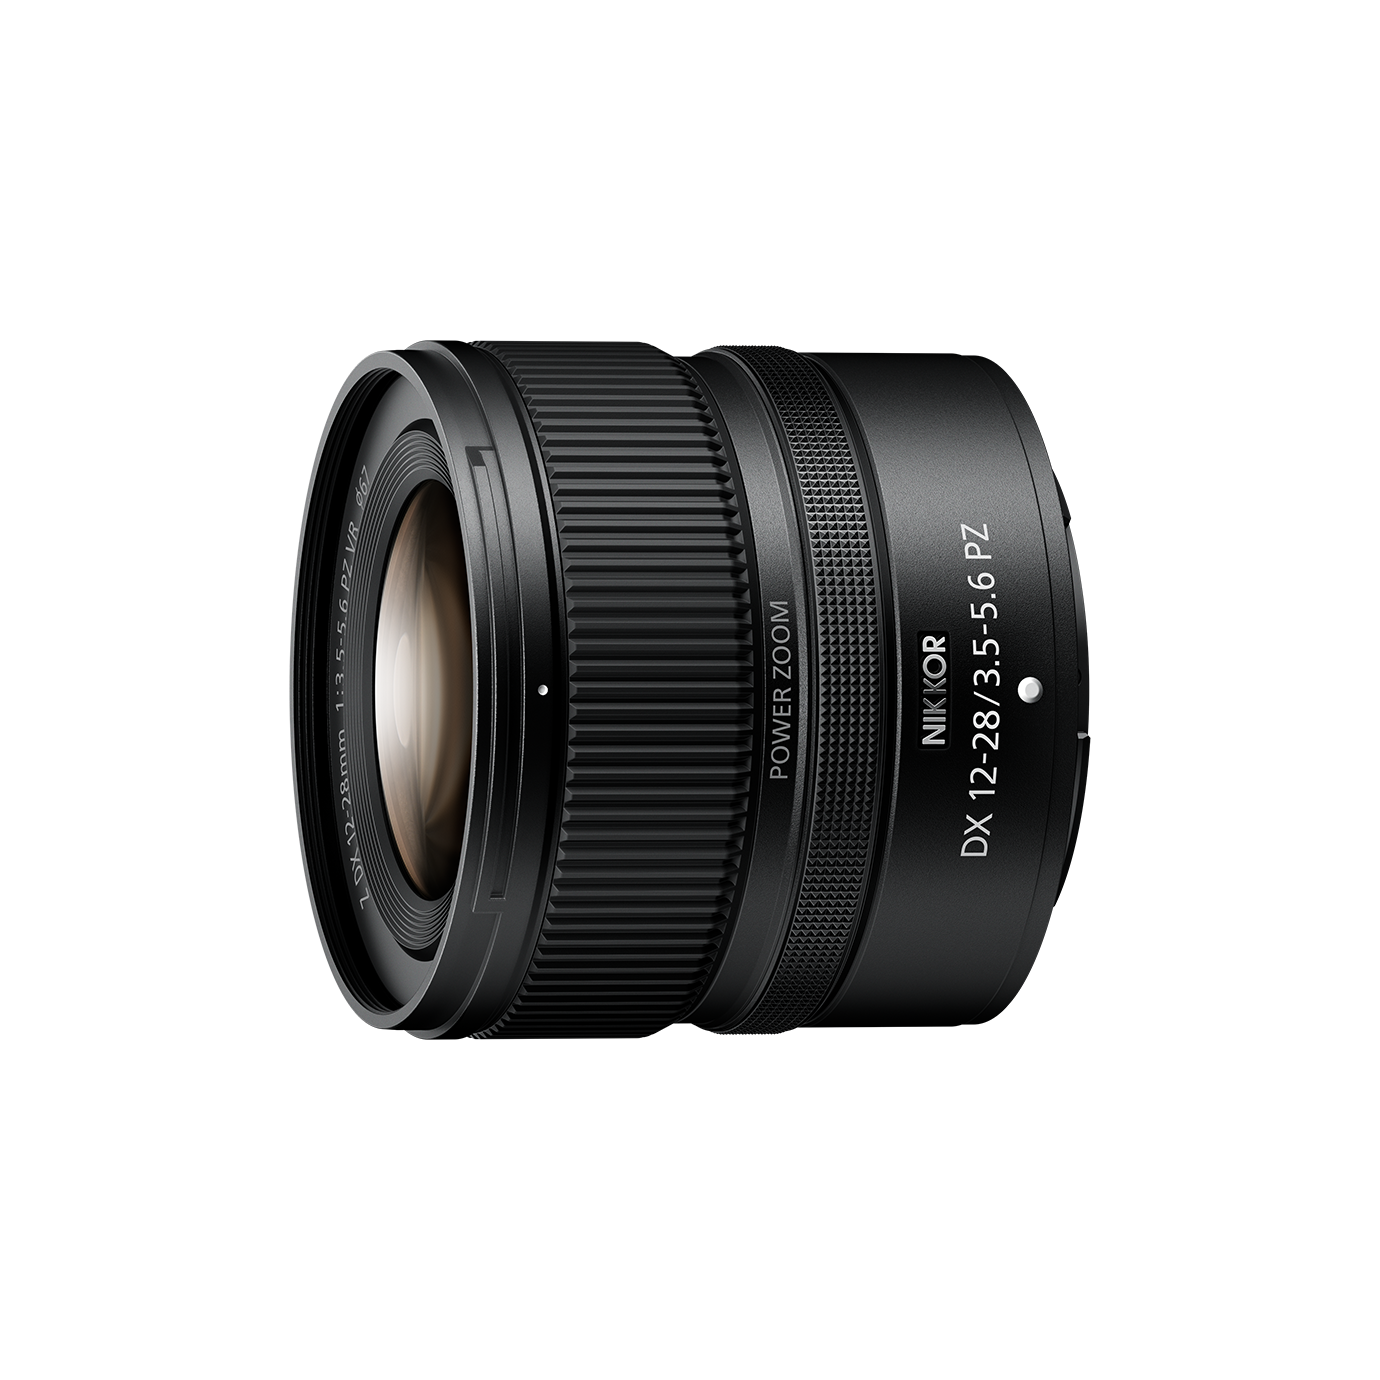 NIKKOR Z DX 12-28mm f/3.5-5.6 PZ VR | Nikon Cameras, Lenses & Accessories